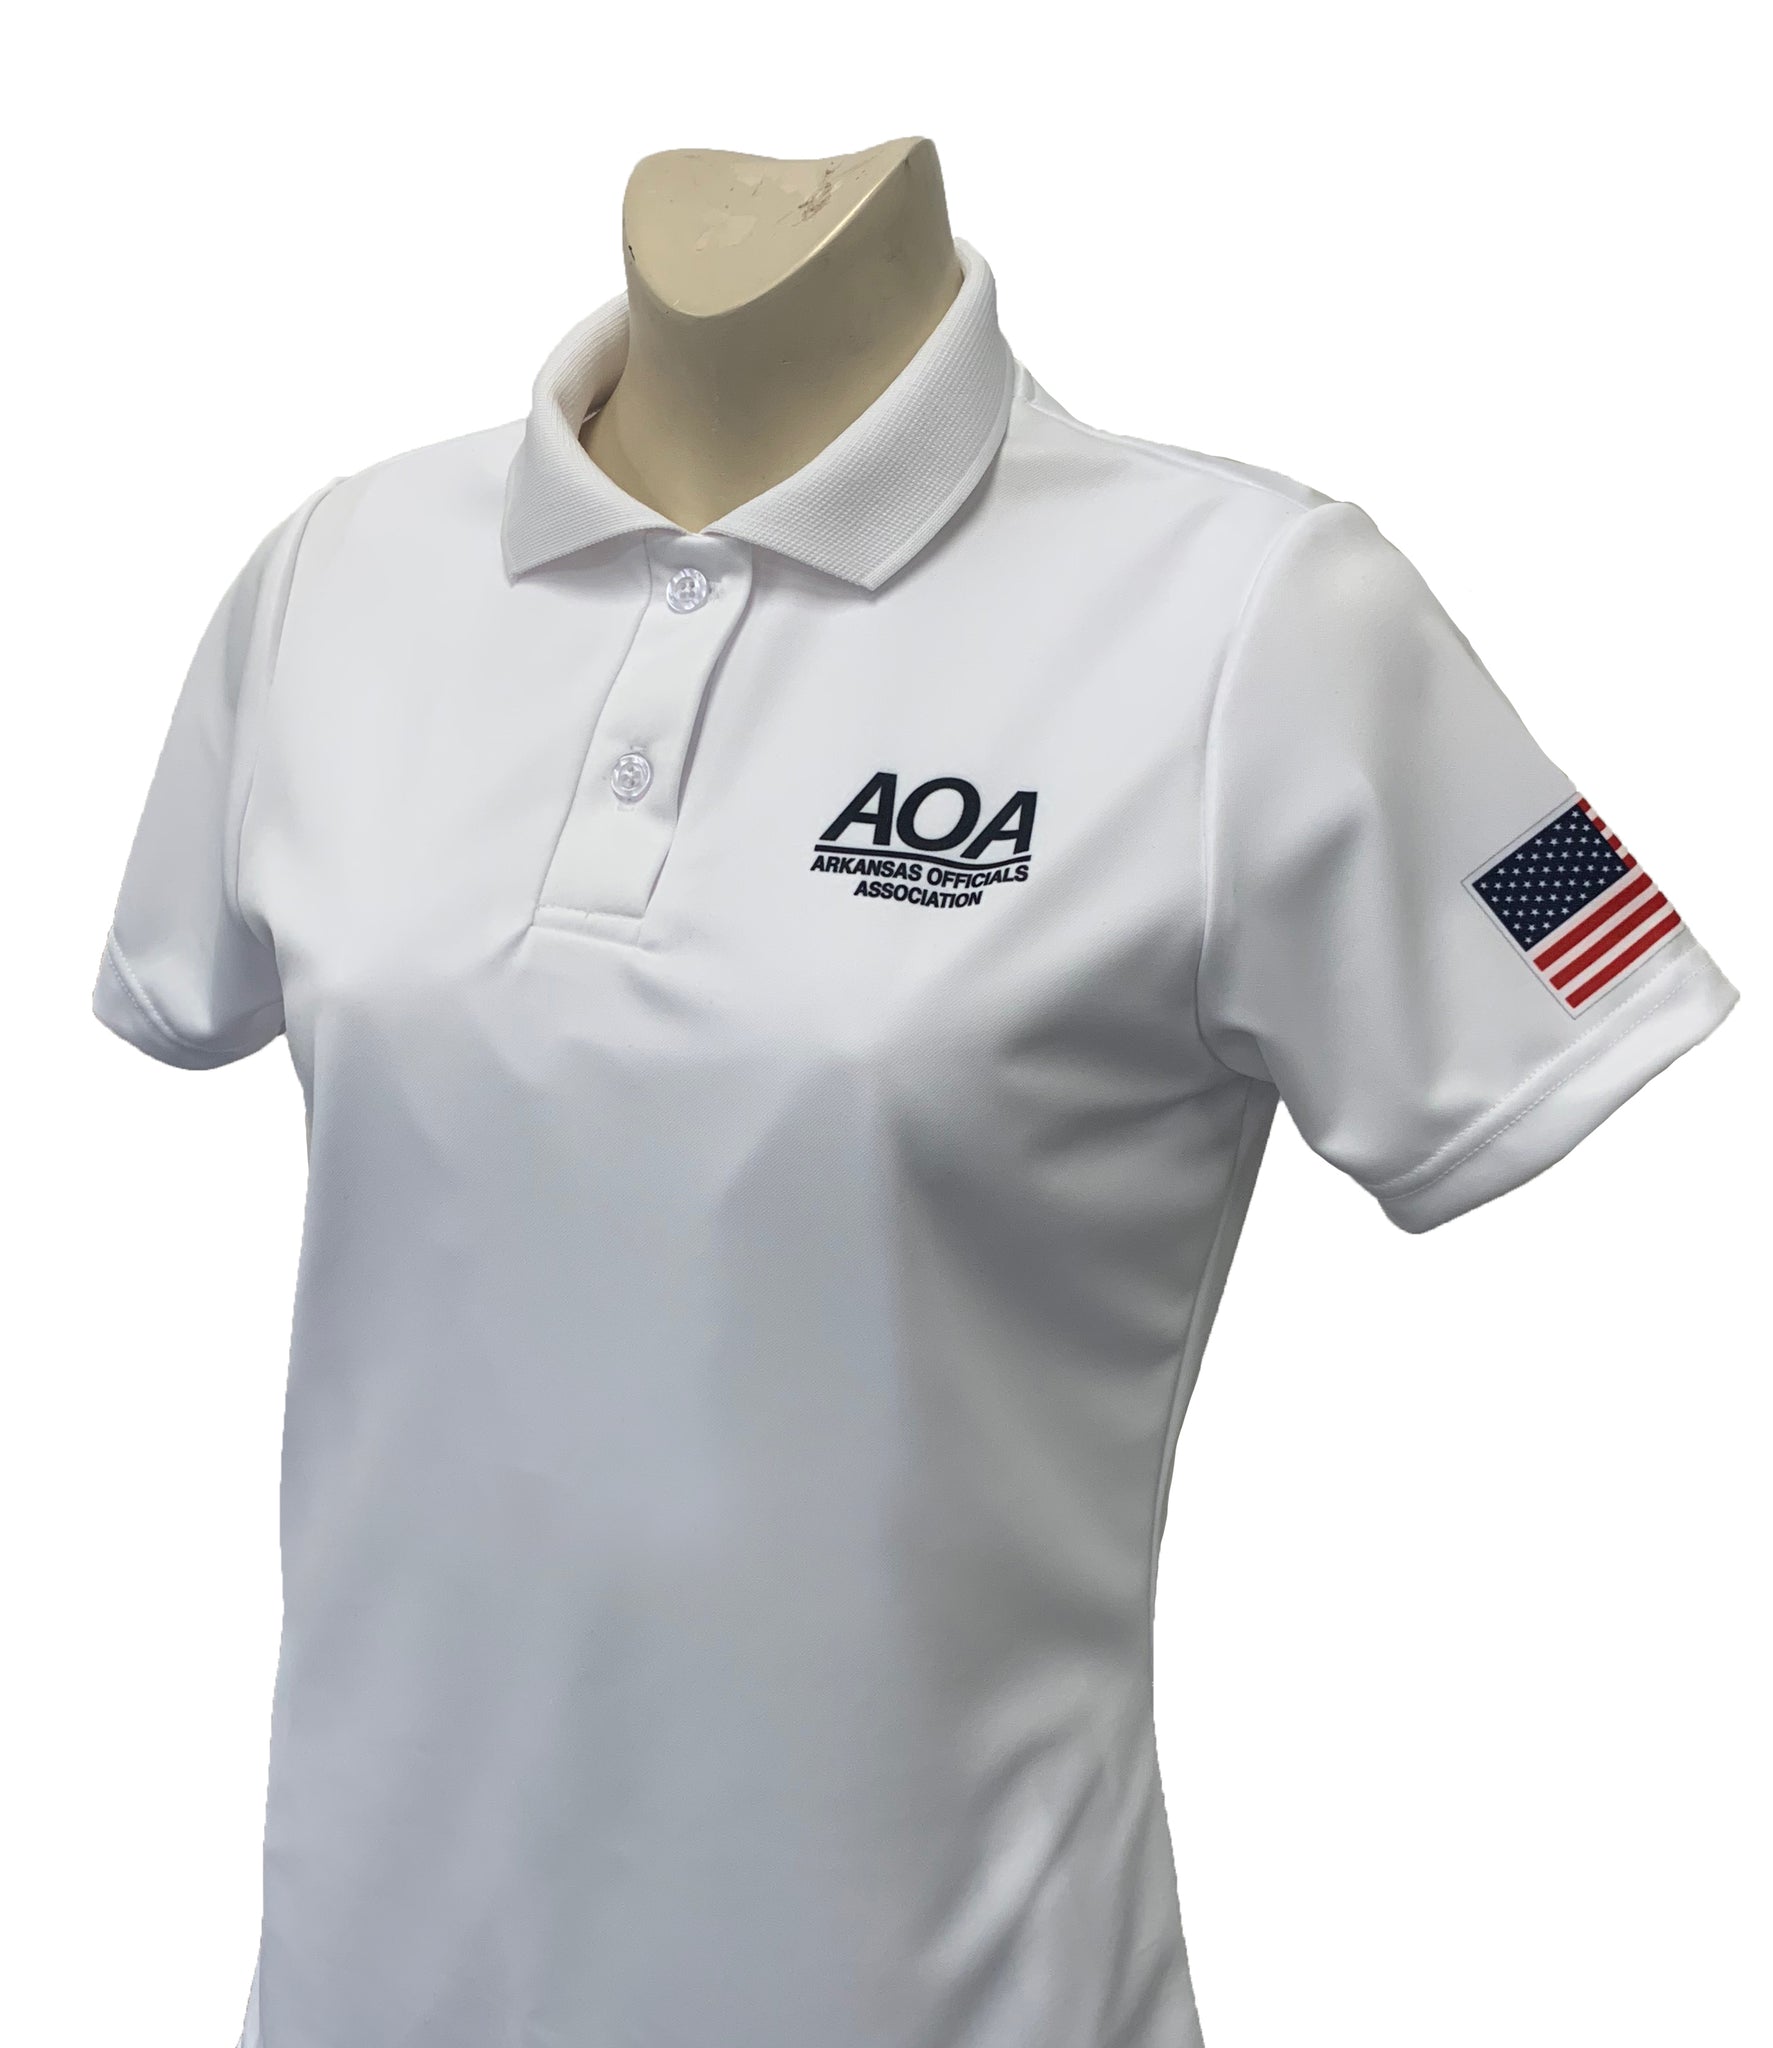 USA402AR - Smitty "Made in USA" -AOA Women's Short Sleeve WHITE Volleyball Shirt